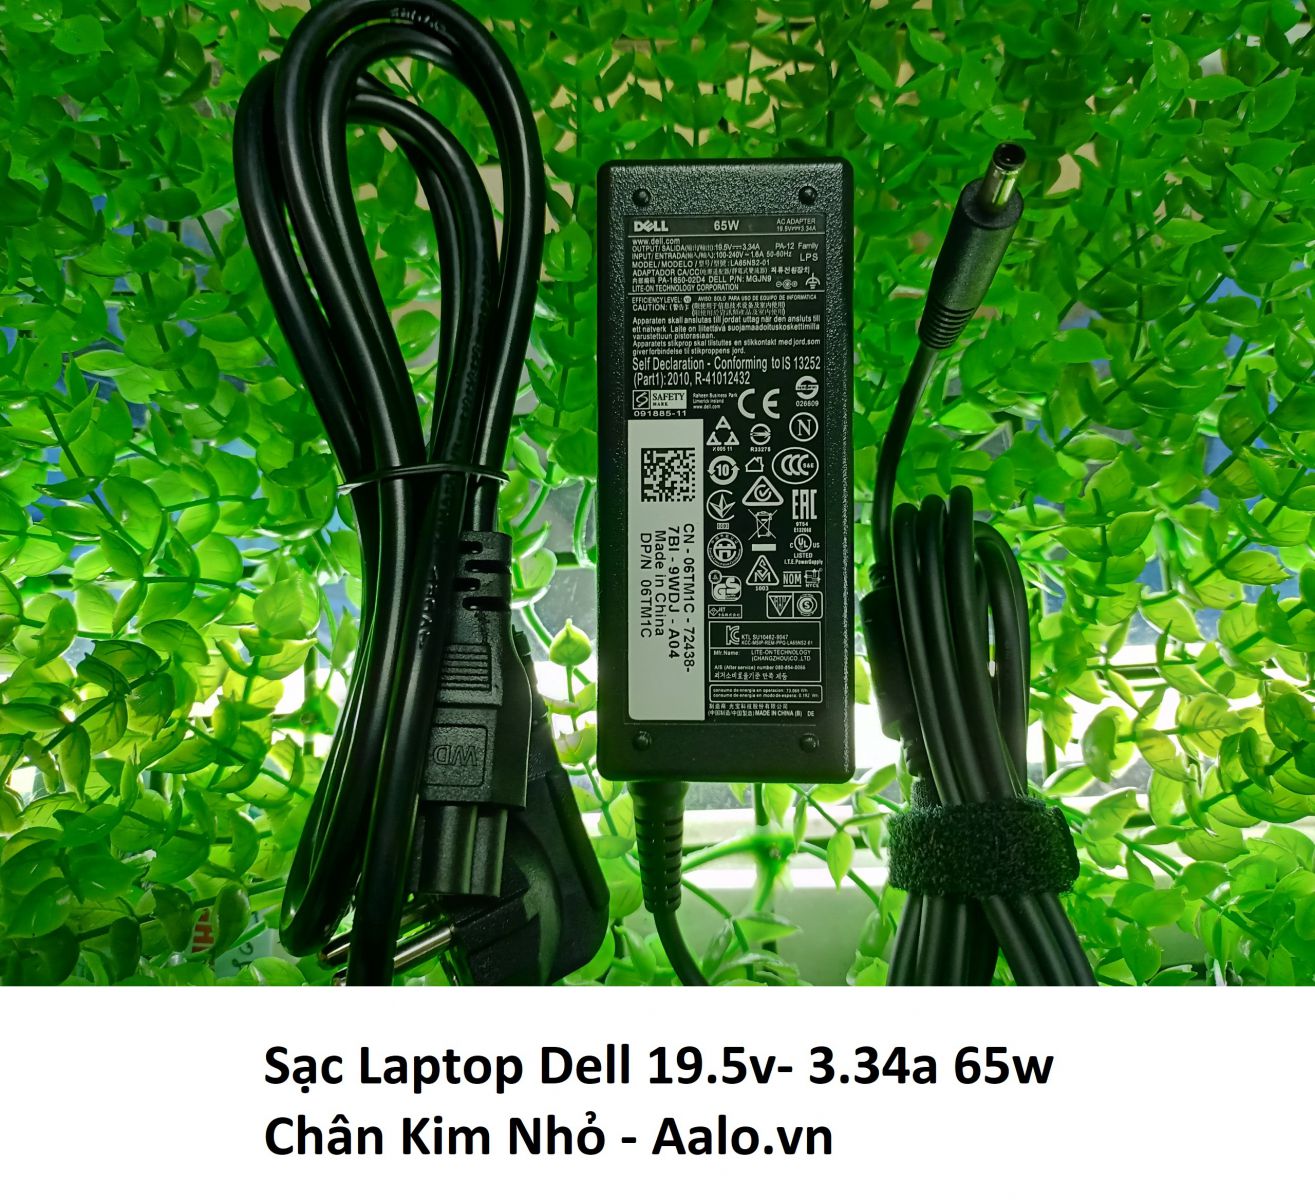 Sạc Laptop Dell 19.5v- 3.34a 65w Chân Kim Nhỏ